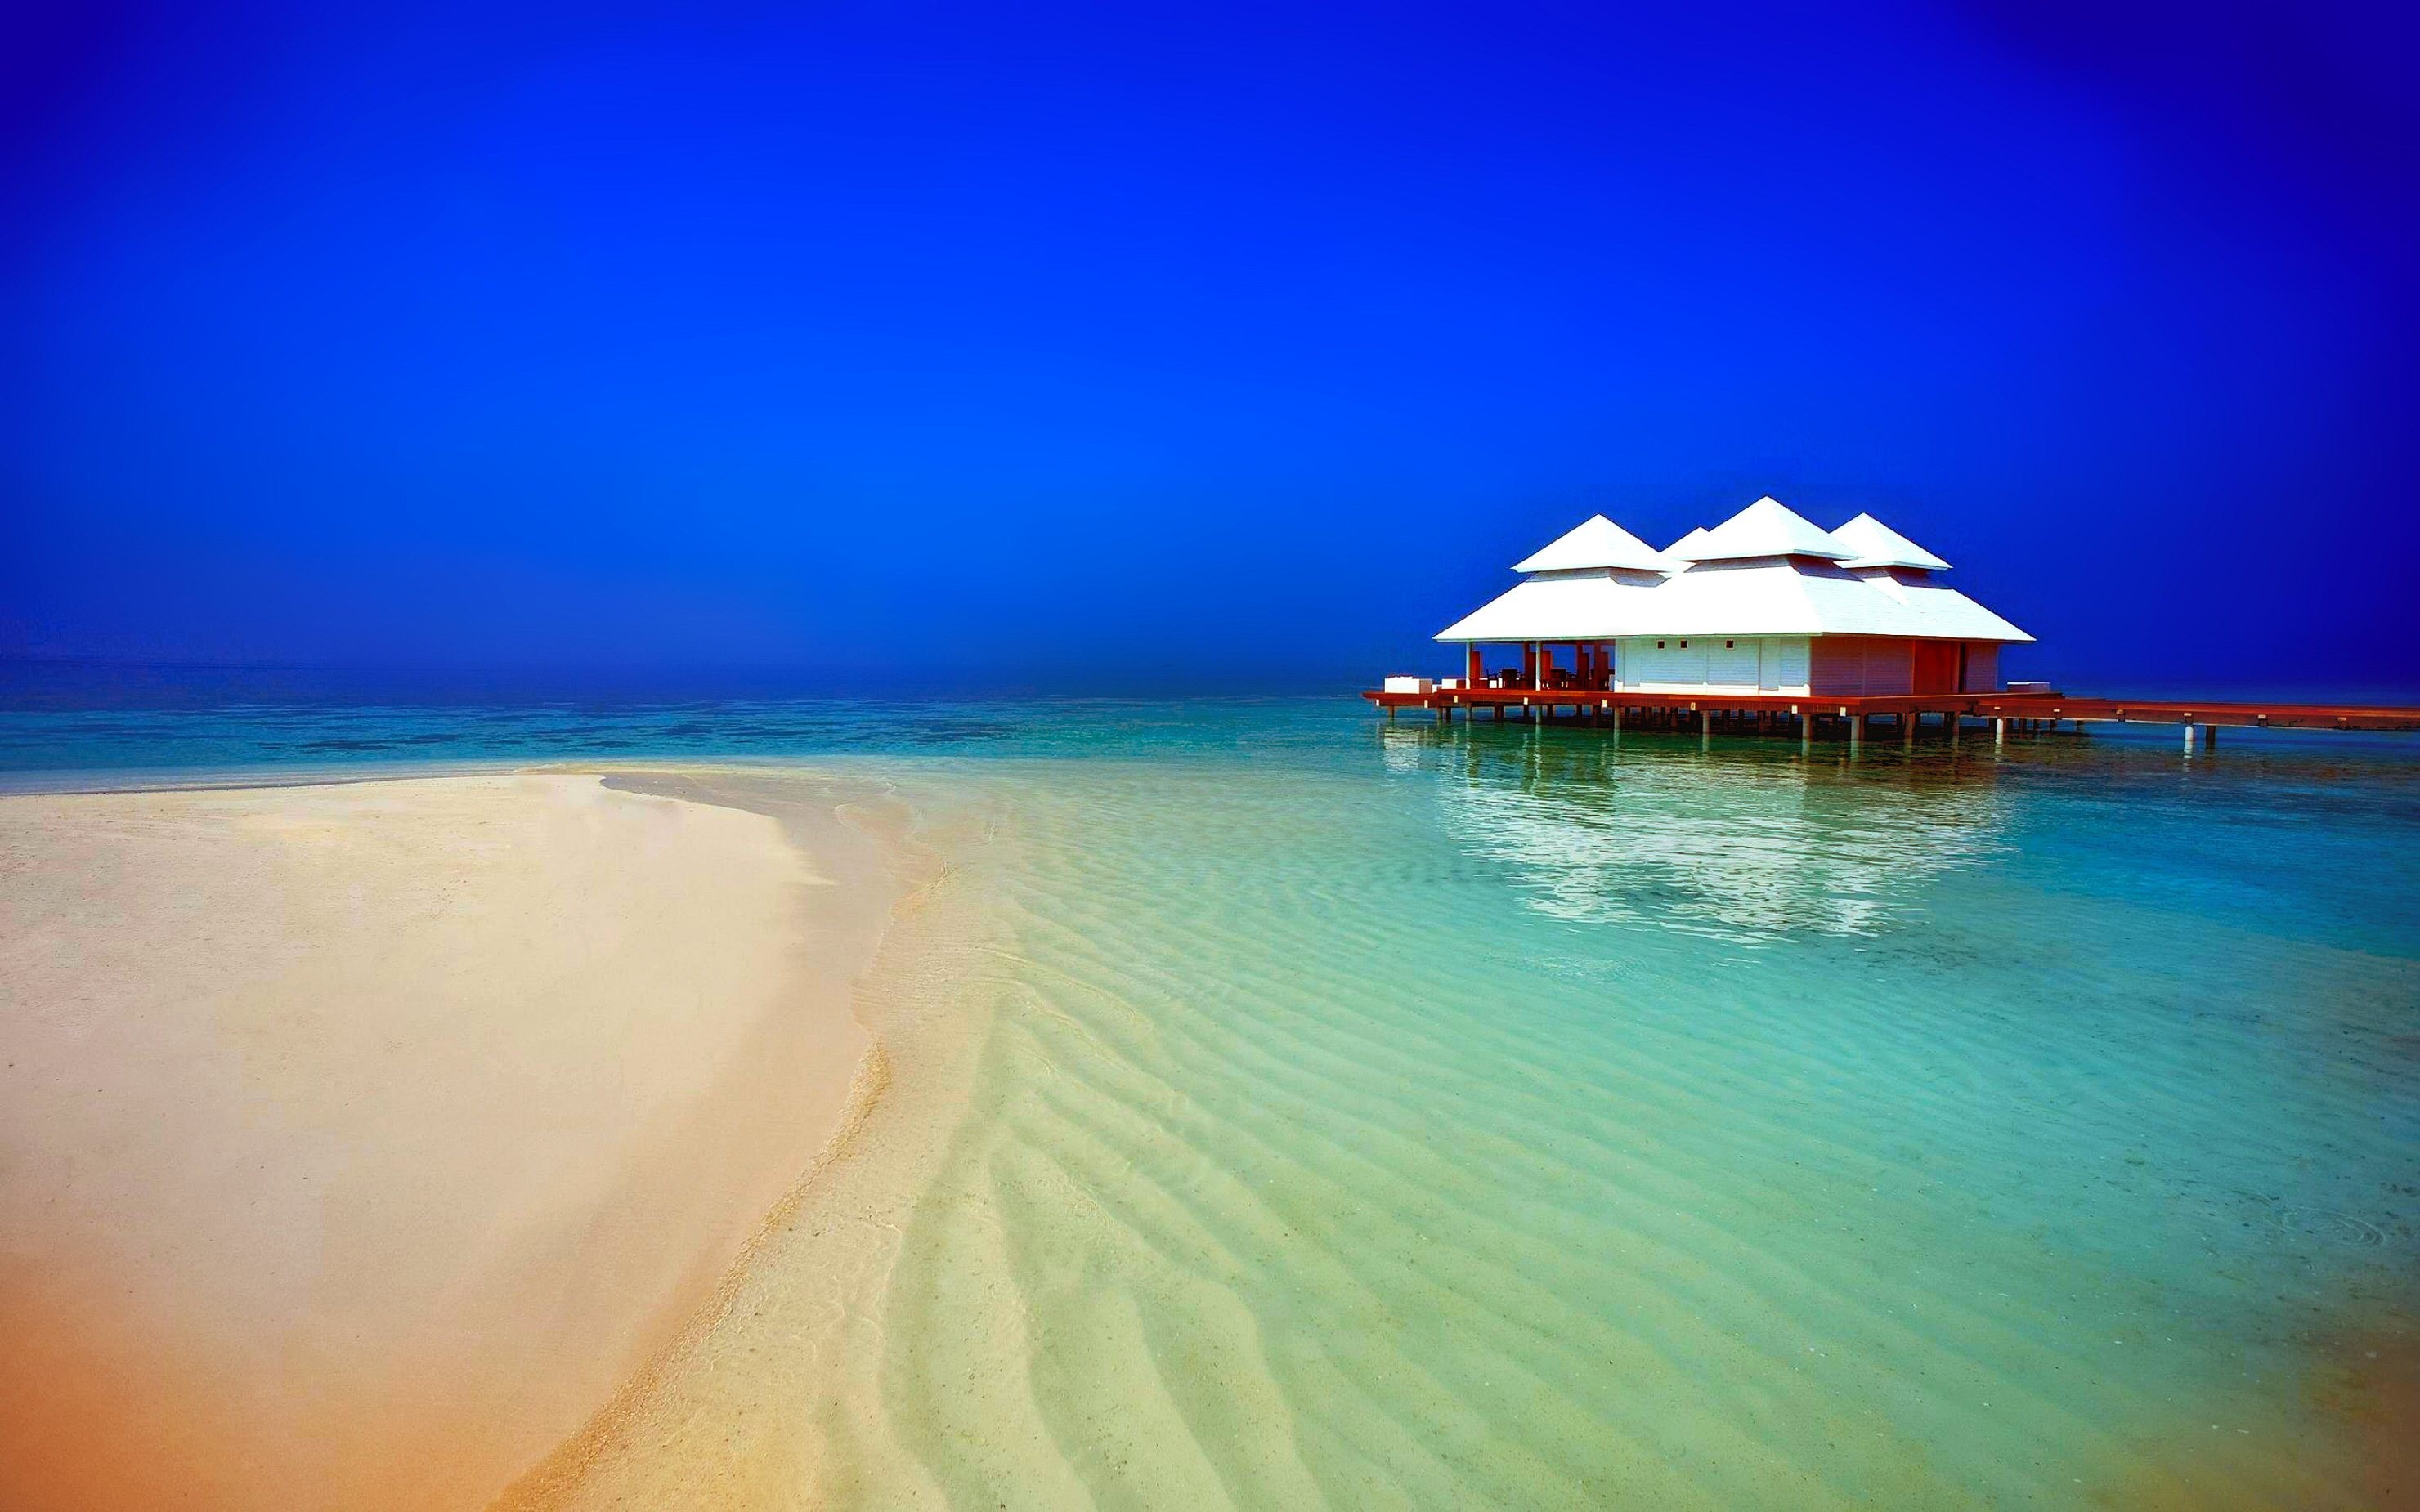 General 2960x1850 sea bungalow tropical beach resort sky horizon nature outdoors sand